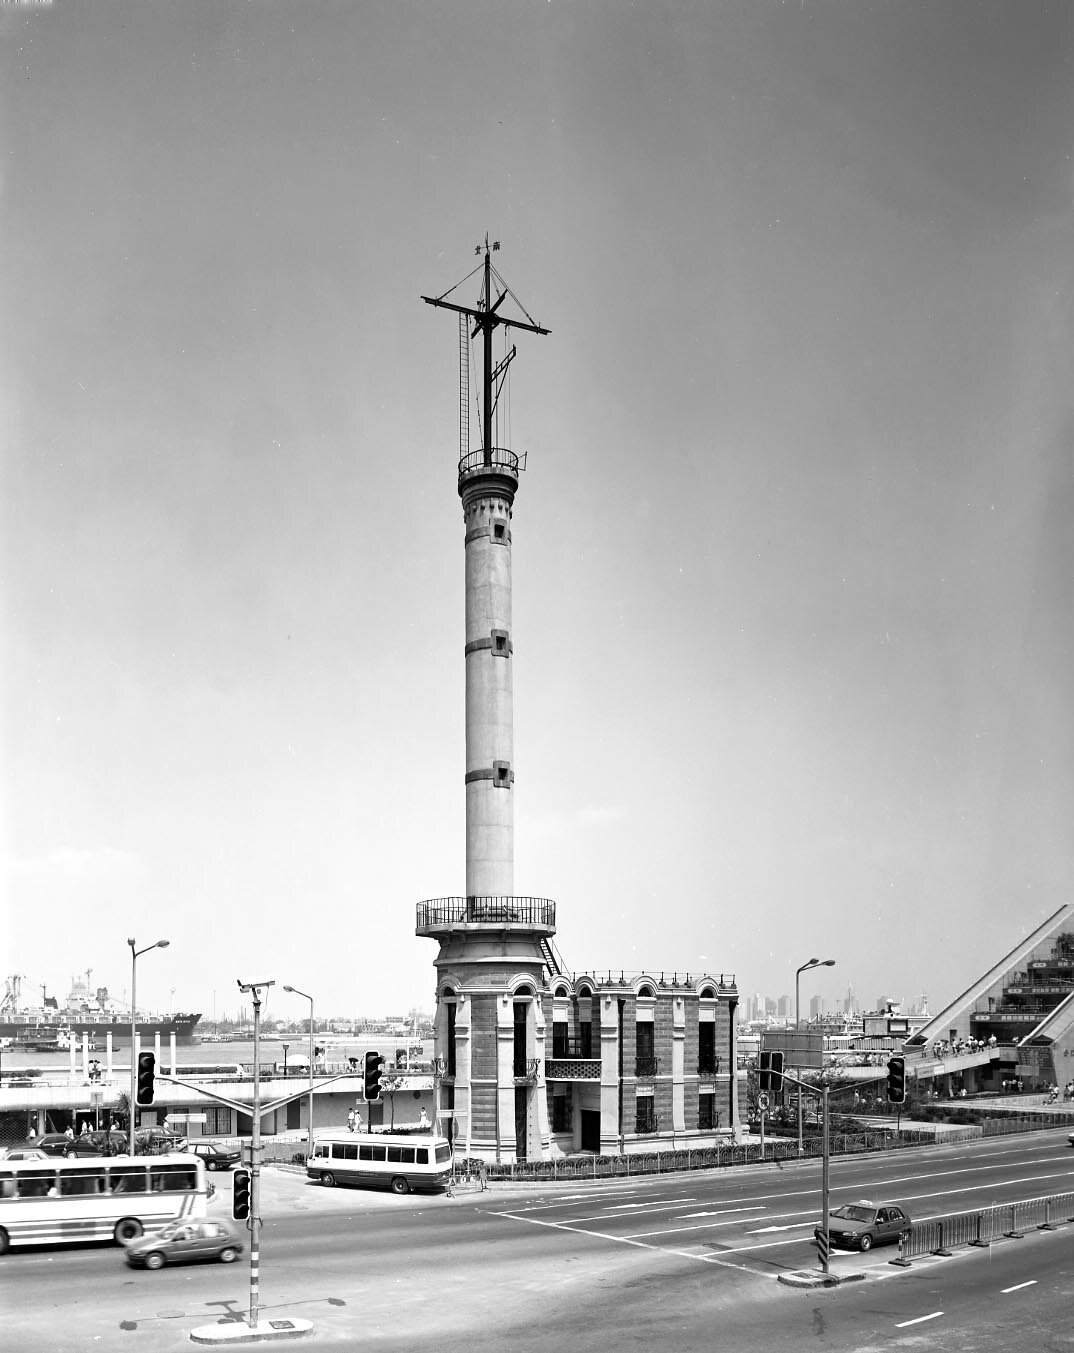 The Gutzlaff Signal Tower